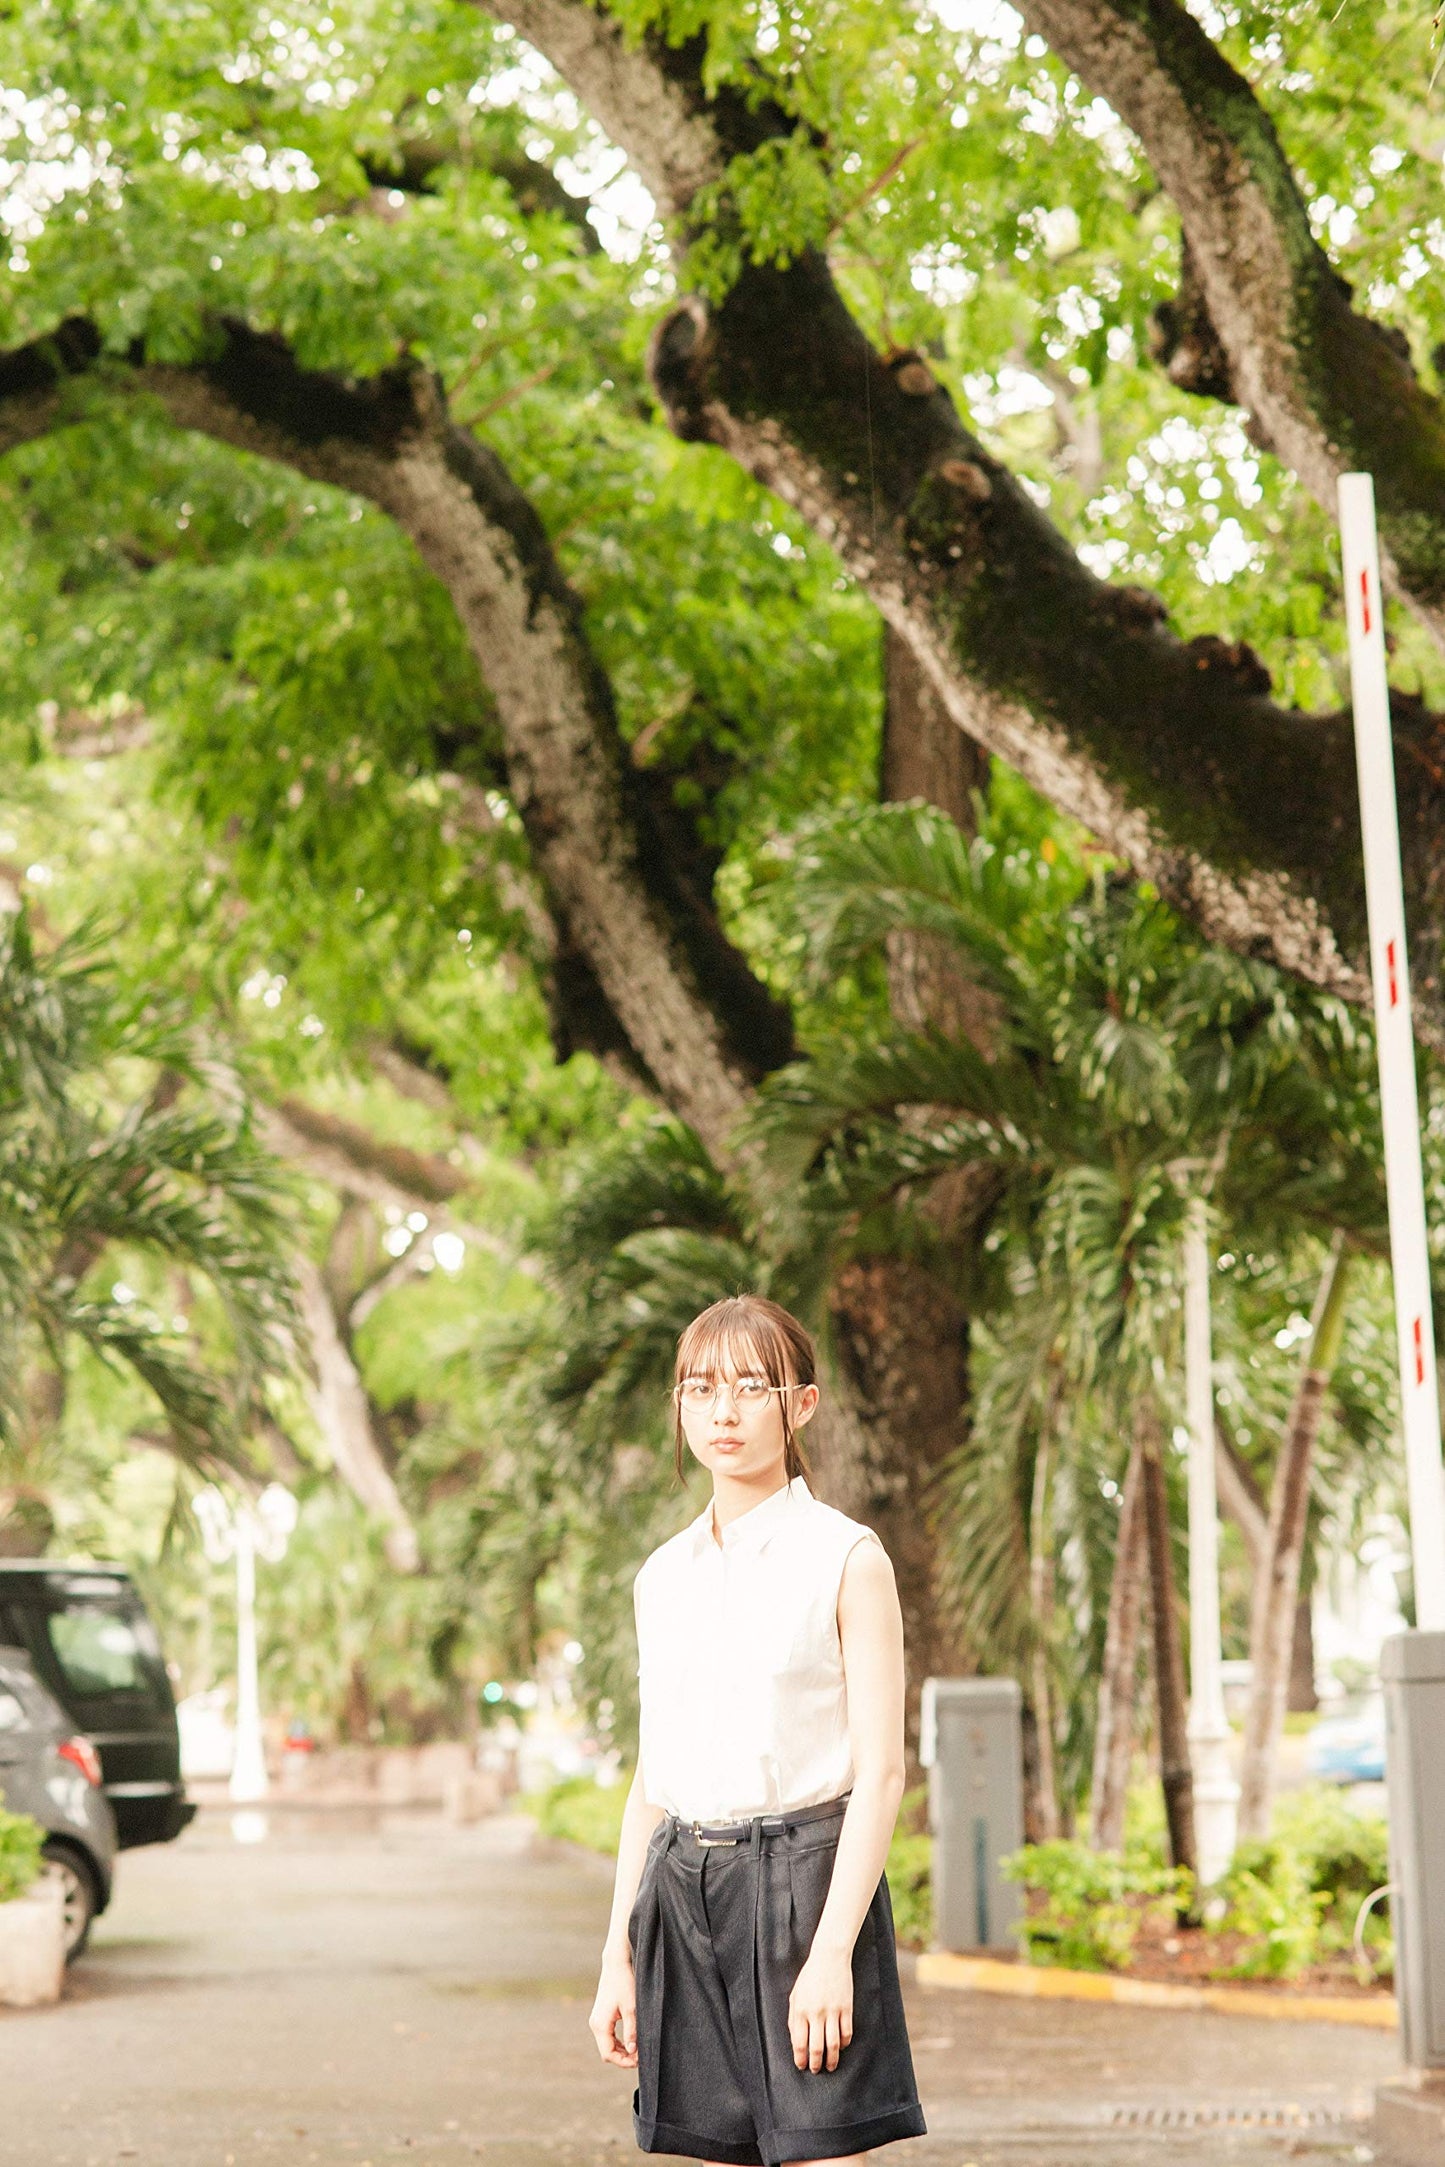 Ayane Suzuki 1st Photo Book "Angle of Light" / Nogizaka46